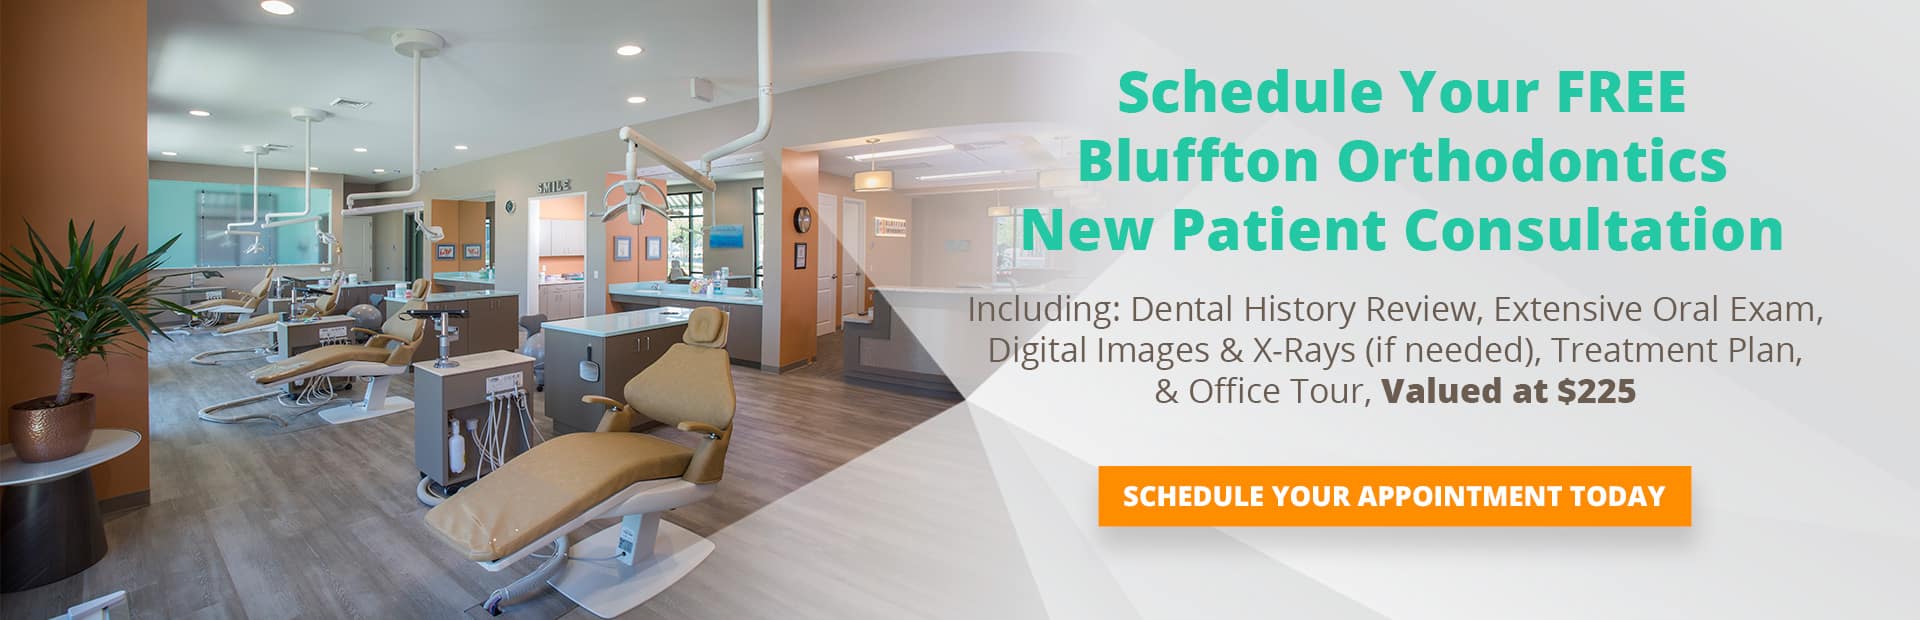 new patient consultation bluffton orthodontics